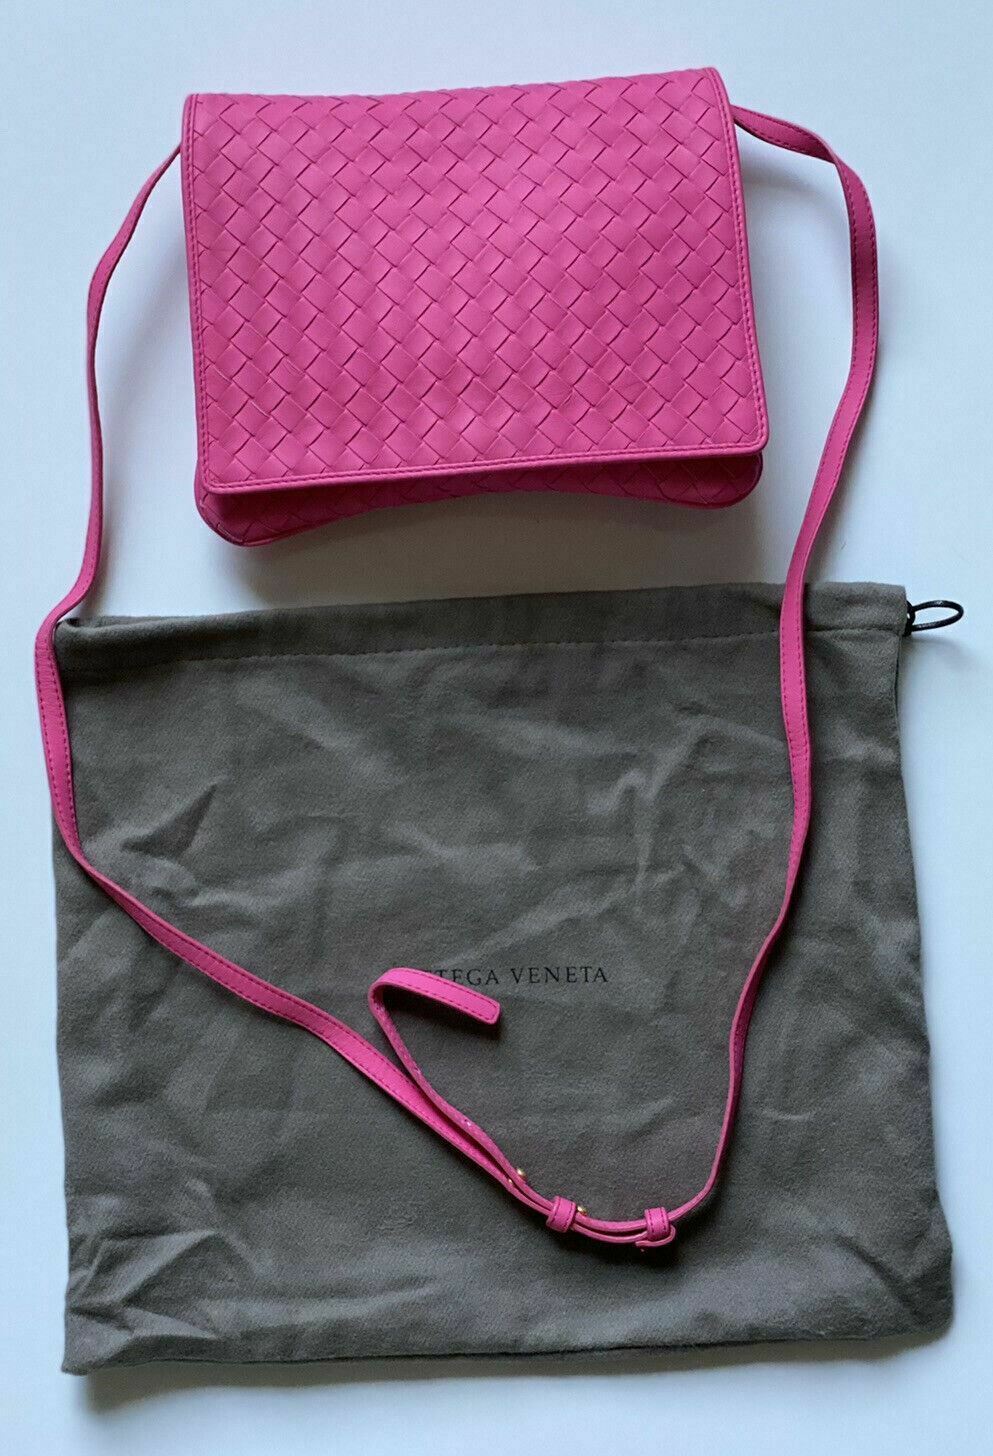 NWT $1250 Bottega Veneta Neon Intrecciato Nappa Leather Crossbody Bag IT 570183